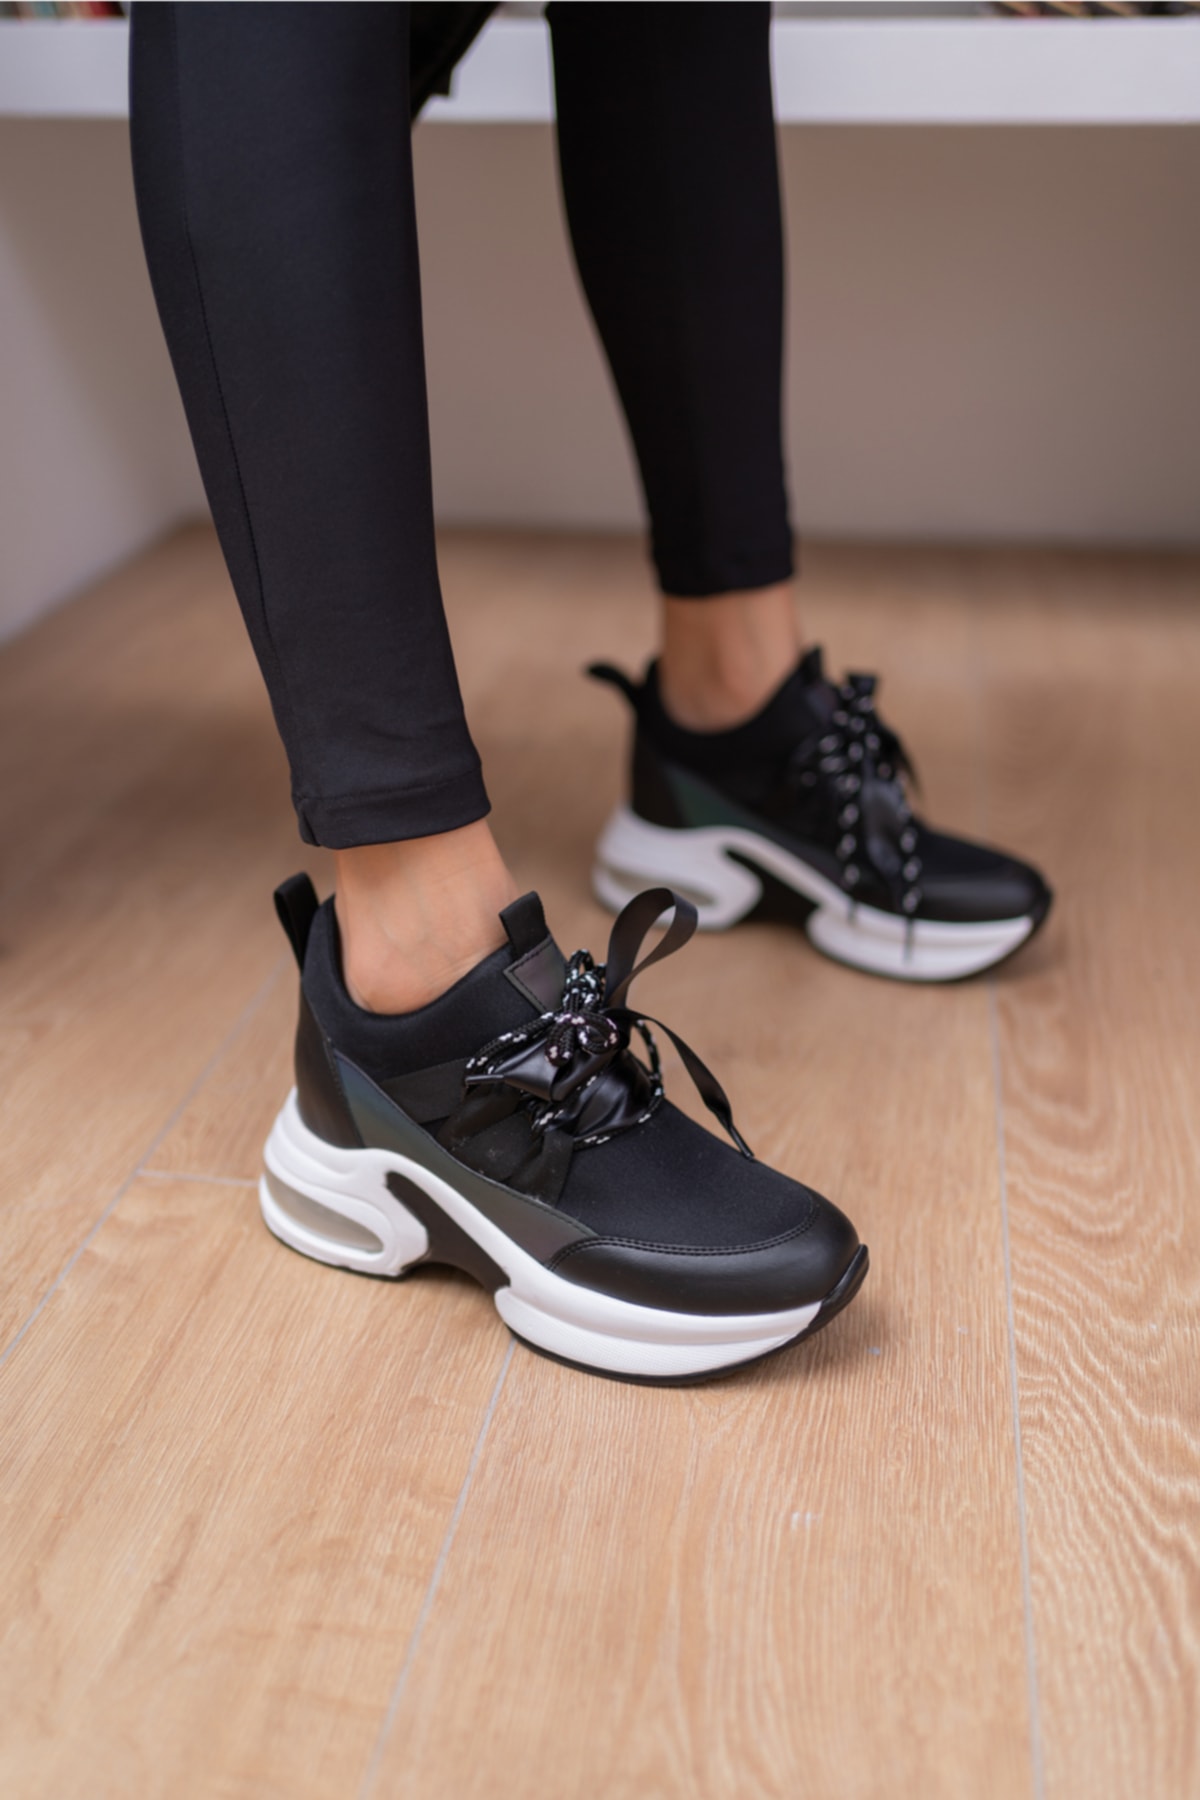 ANGELİNA JONES Hanna Kadın Siyah Dalgıc Kumas Detay Dolgu Topuklu Sneakers